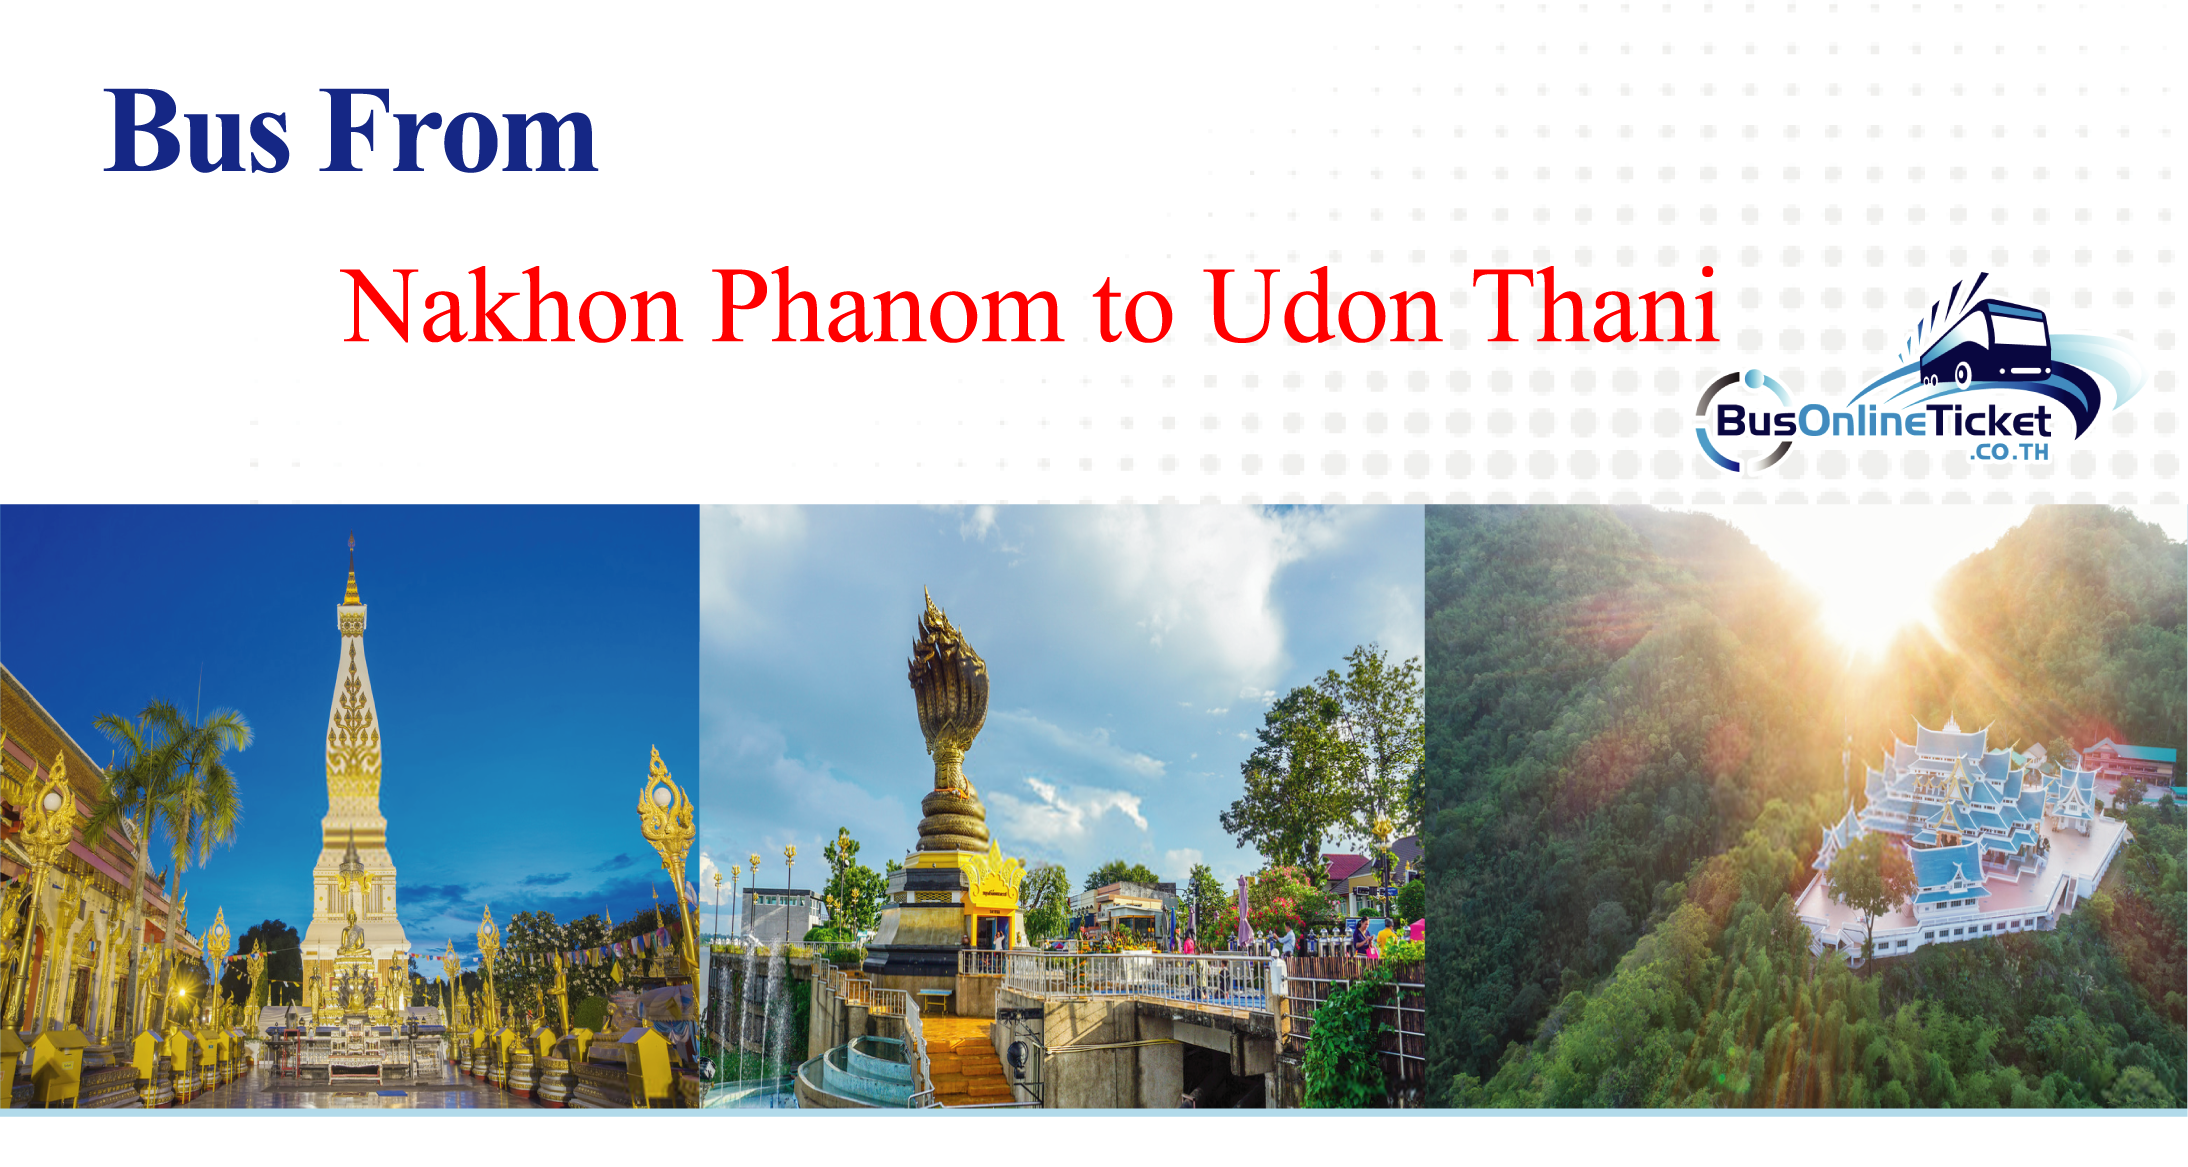 Bus from Nakhon Phanom to Udon Thani